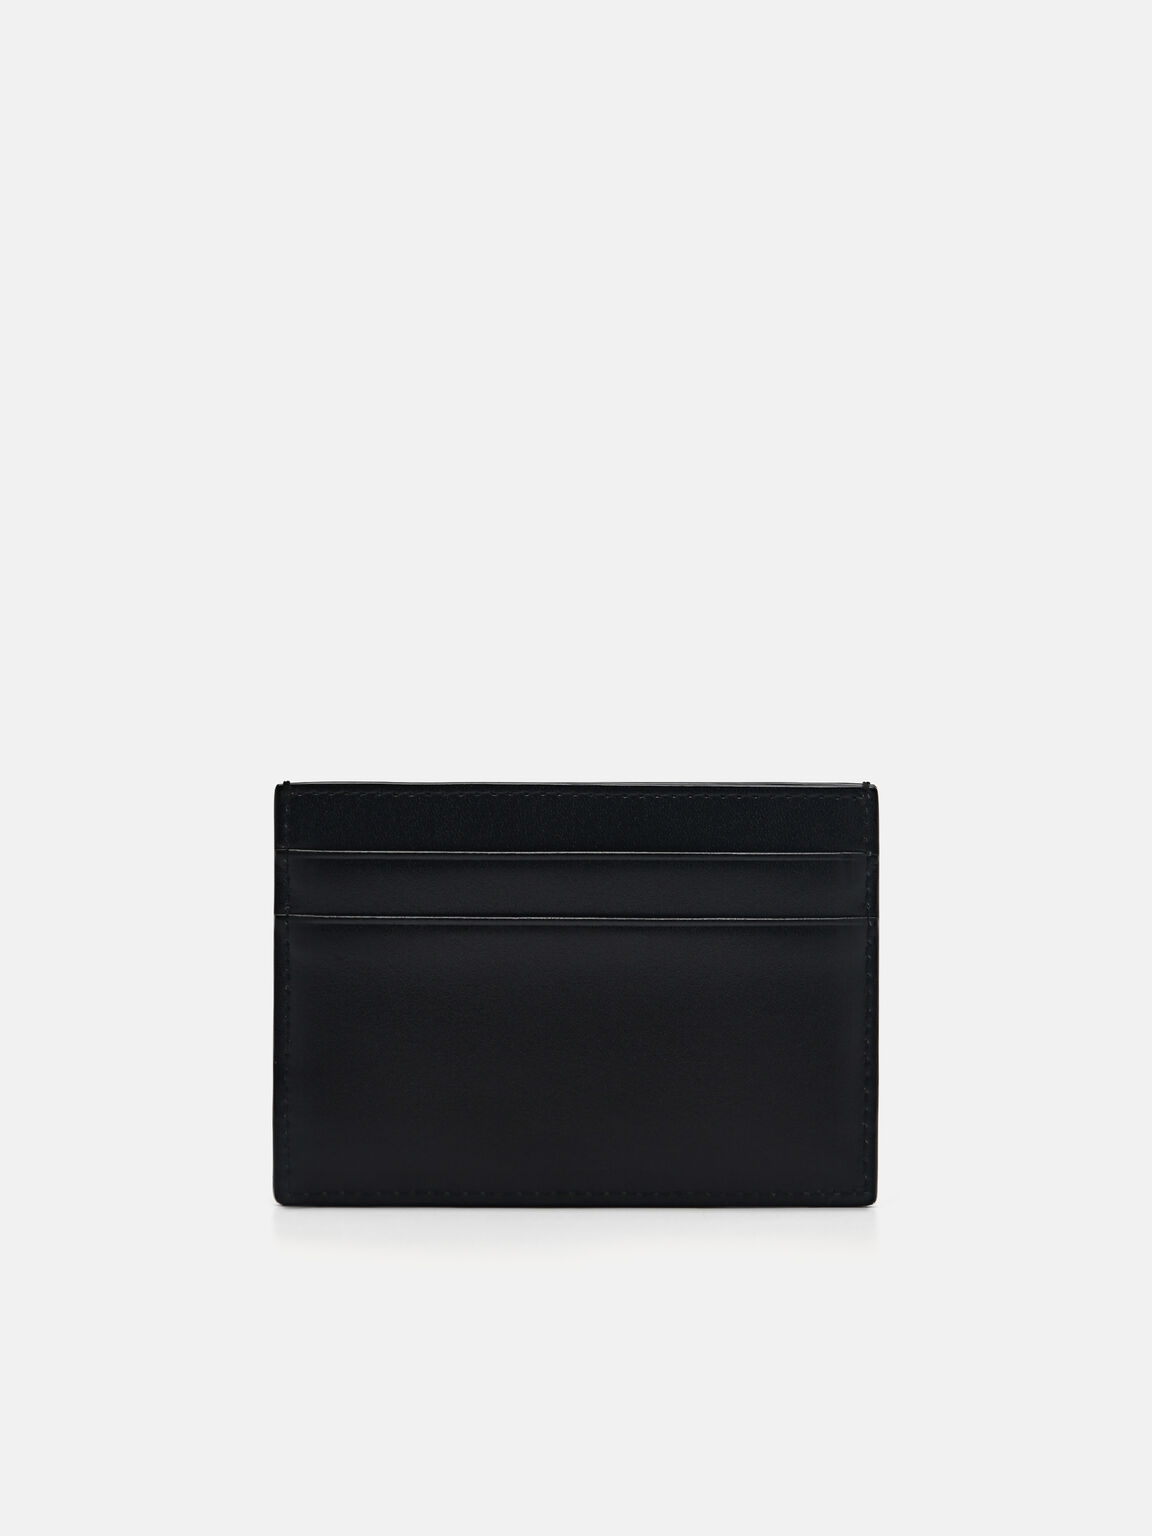 PEDRO Studio Leather Card Holder, Black